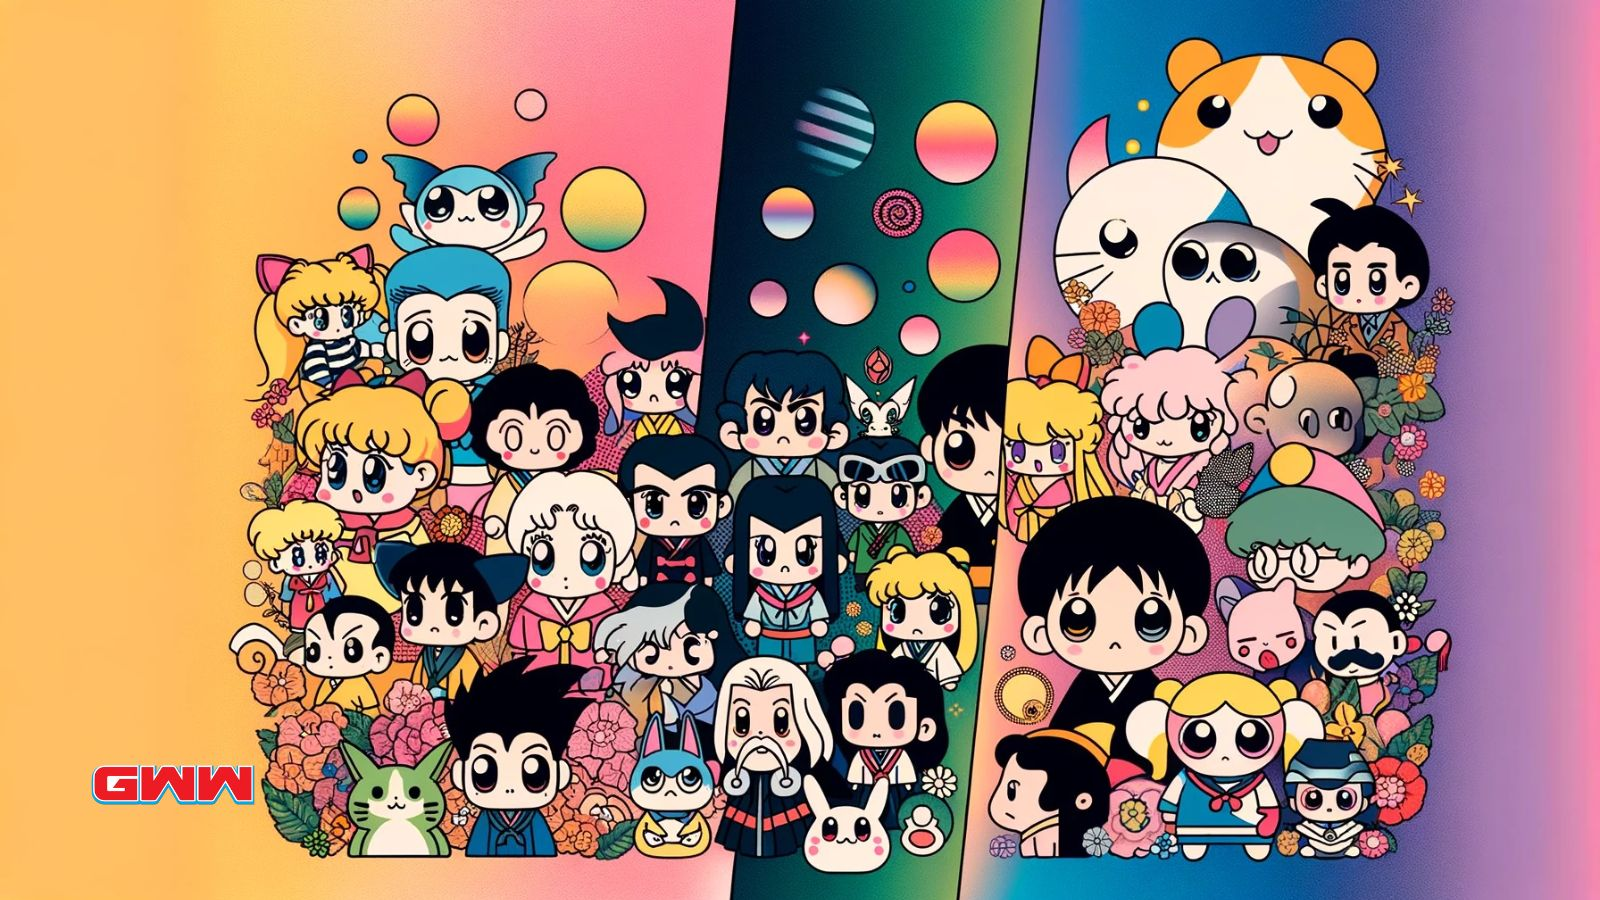 Collage de personajes de anime kawaii con fondo vibrante